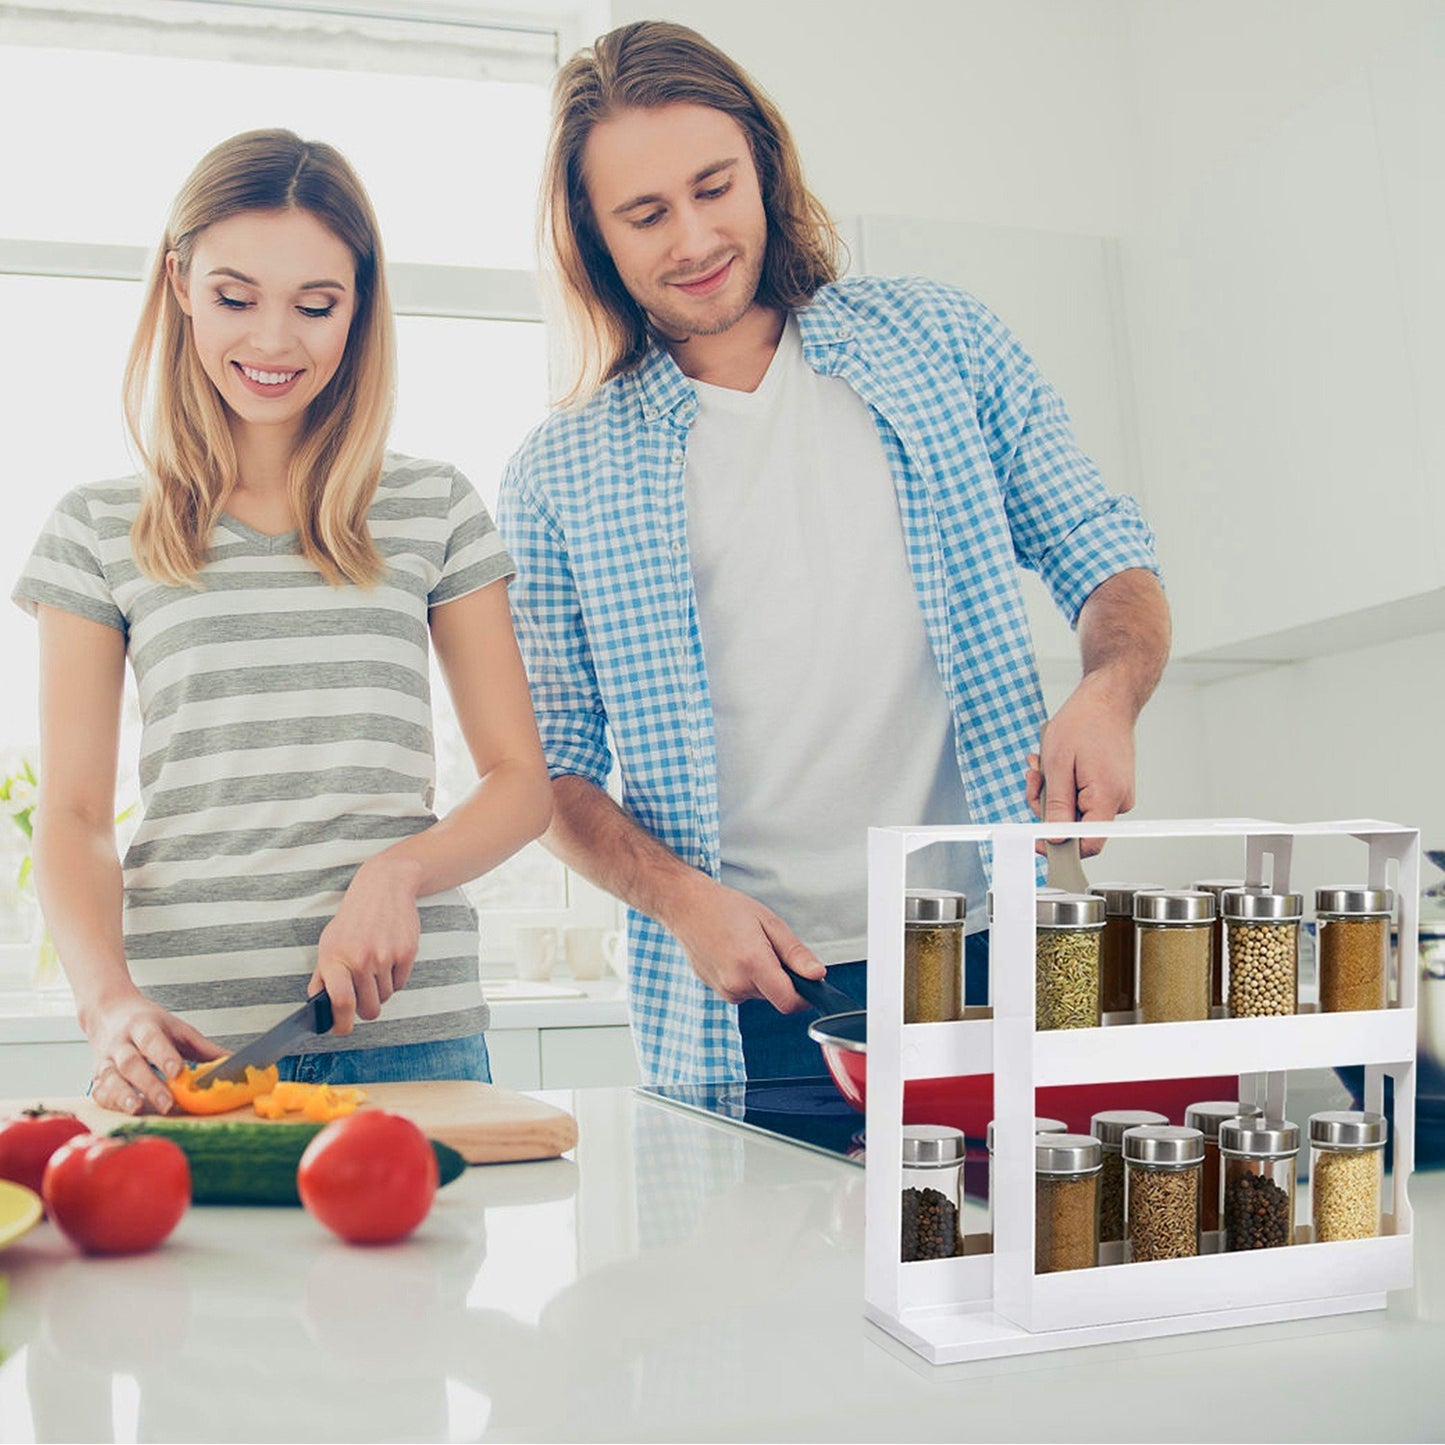 Swivel Cabinet Organizer Revolving Kitchen Rack Spice Organizer for Cabinet Condiment Holder Shelf